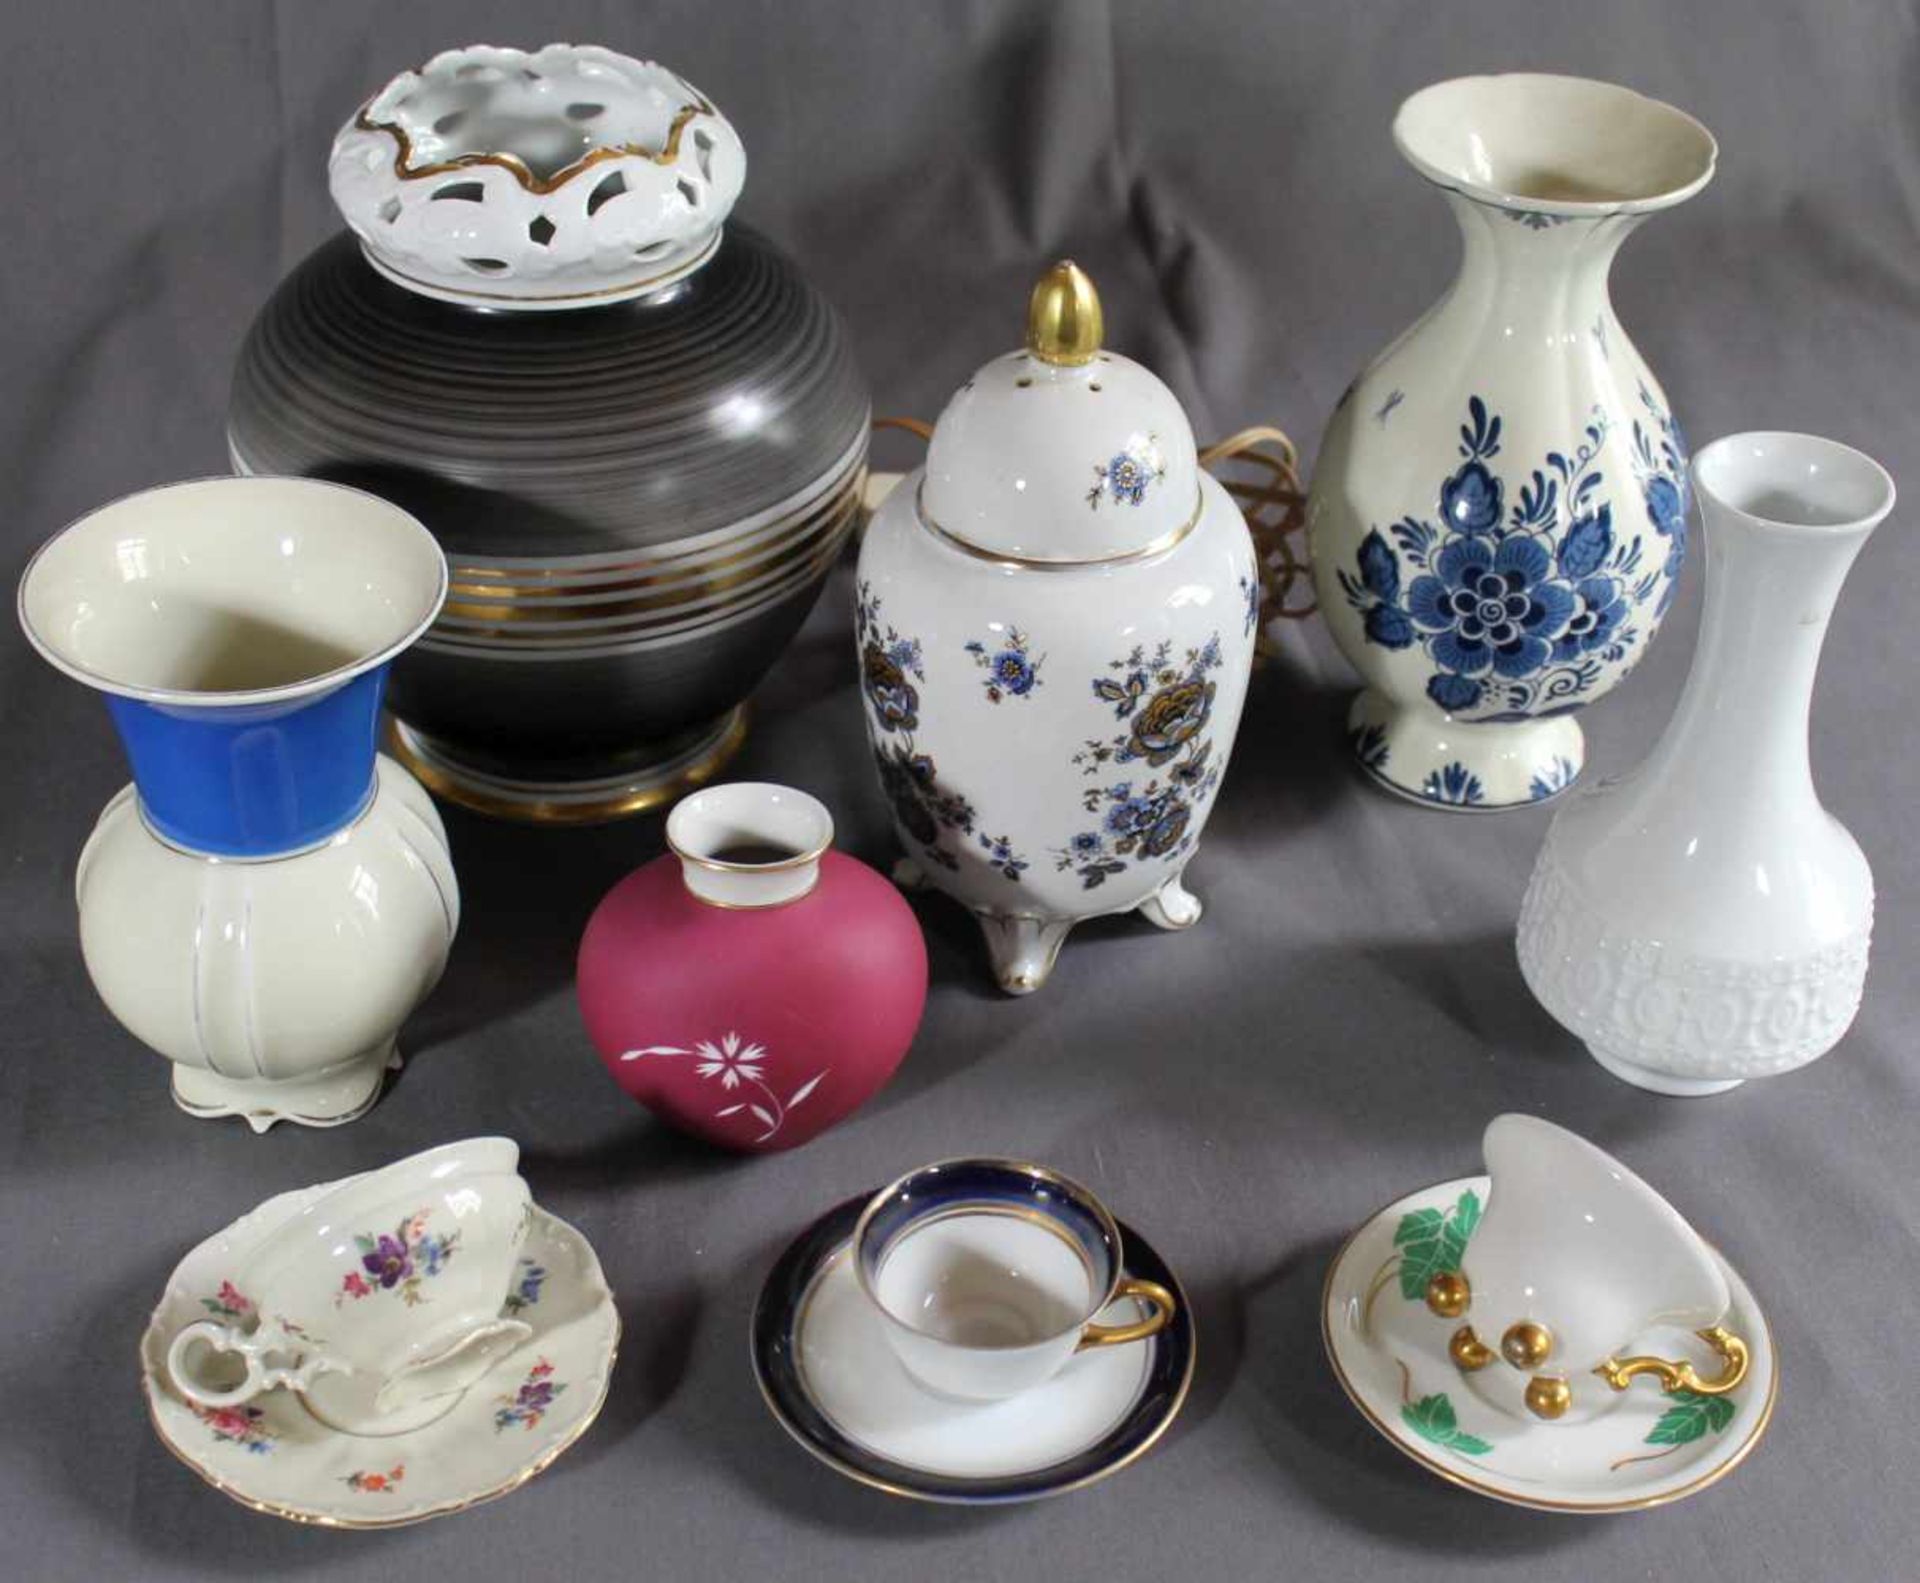 1 Konvolut diverses Porzellan/Keramik bestehend aus 6 Vasen, 1 Rauchverzehrer, 3 Mokkatassen mit